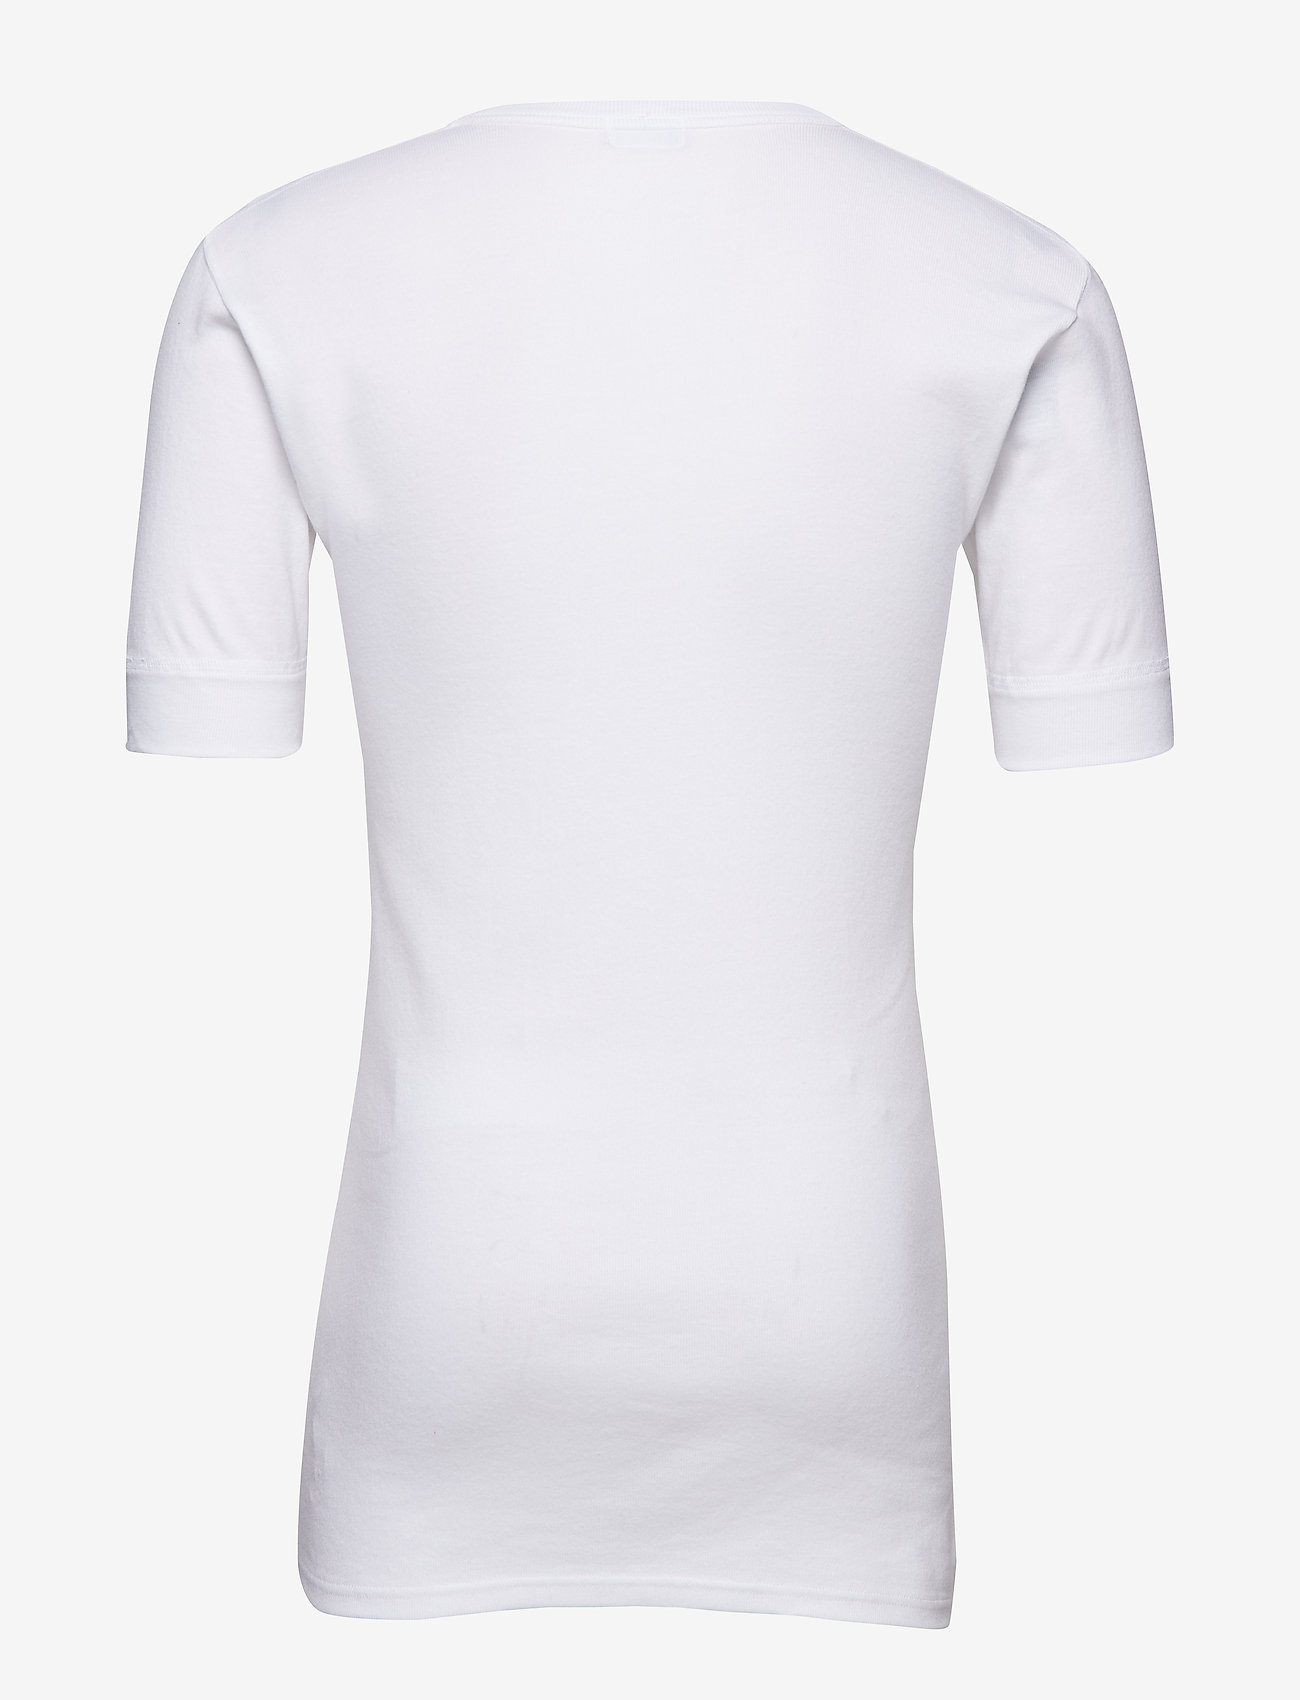 JBS - Original tee - basic t-shirts - white - 1